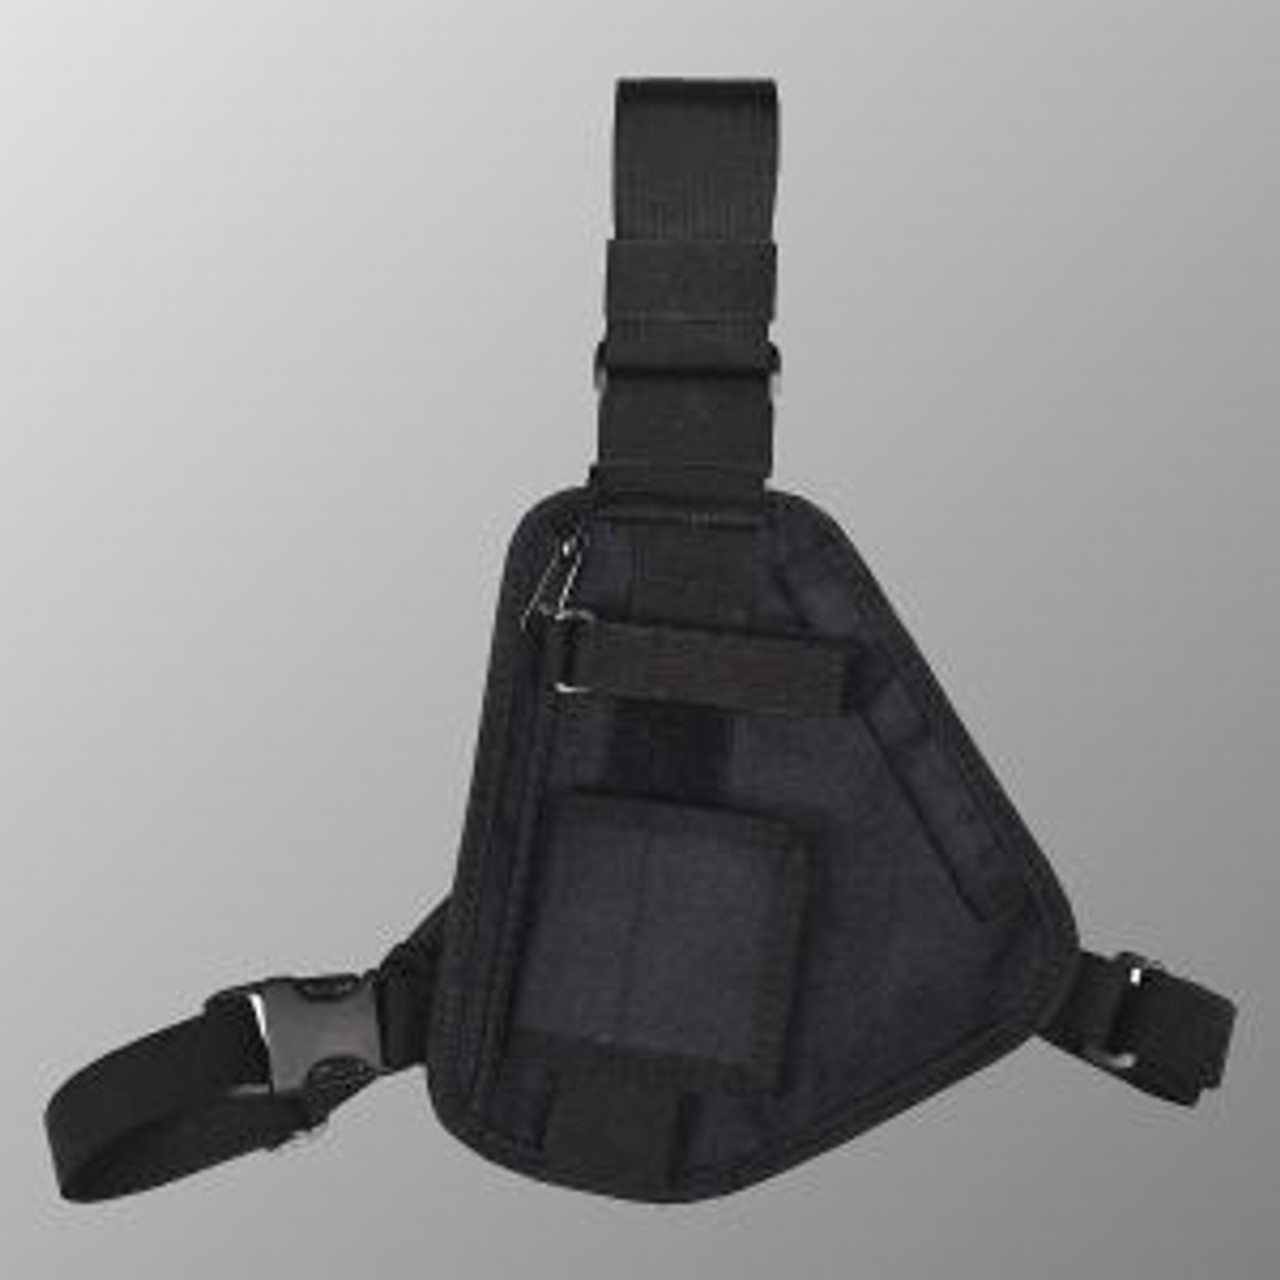 Motorola XTS3500 3-Point Chest Harness - Black